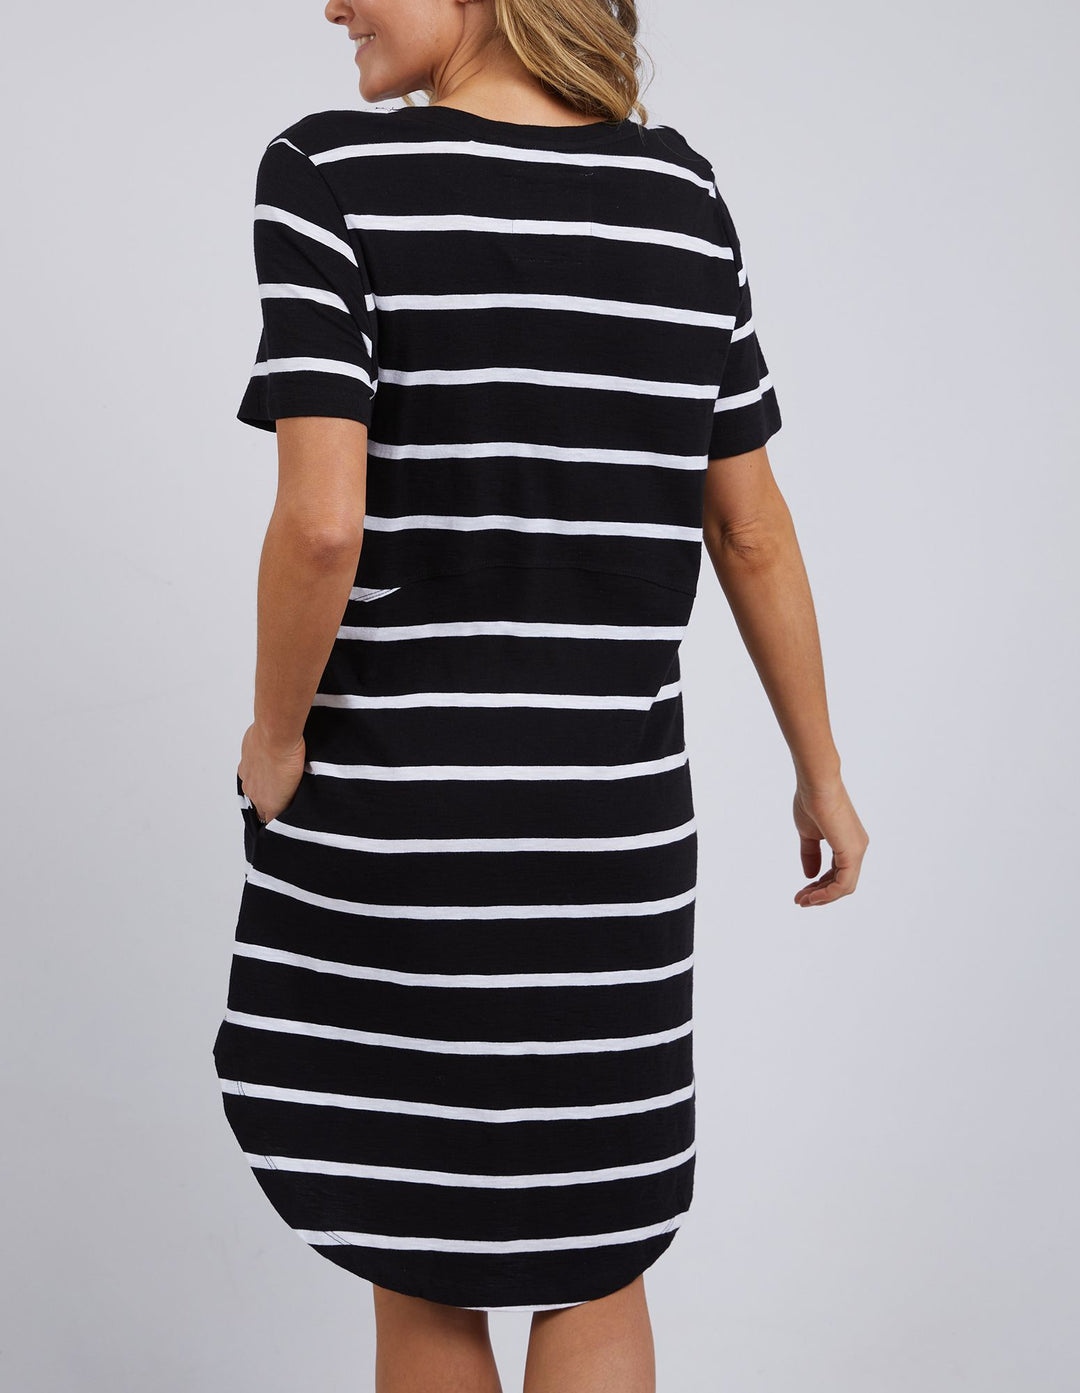 Bay Stripe Dress - Black